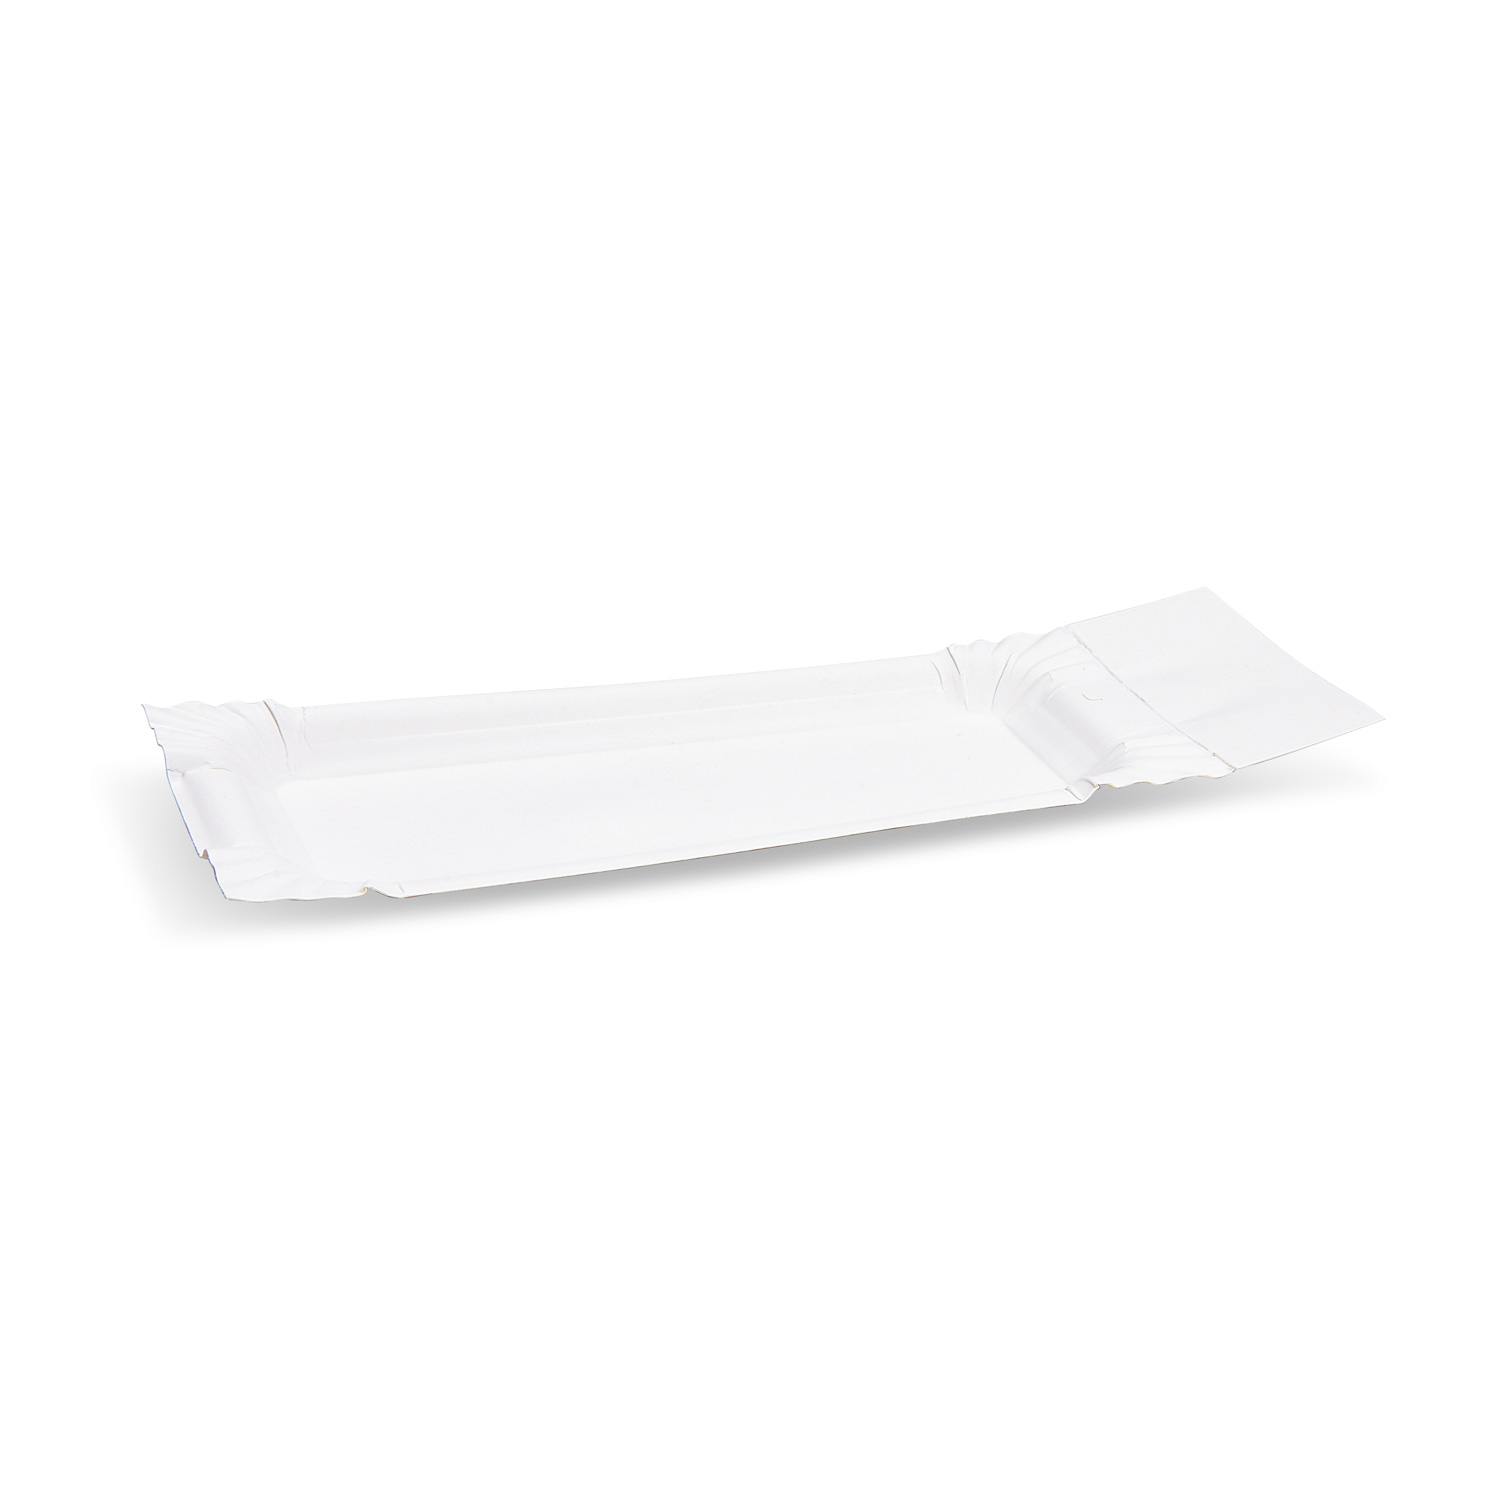 Pappteller mit Abriß weiß 8 x 18+3 cm - 250 Stück